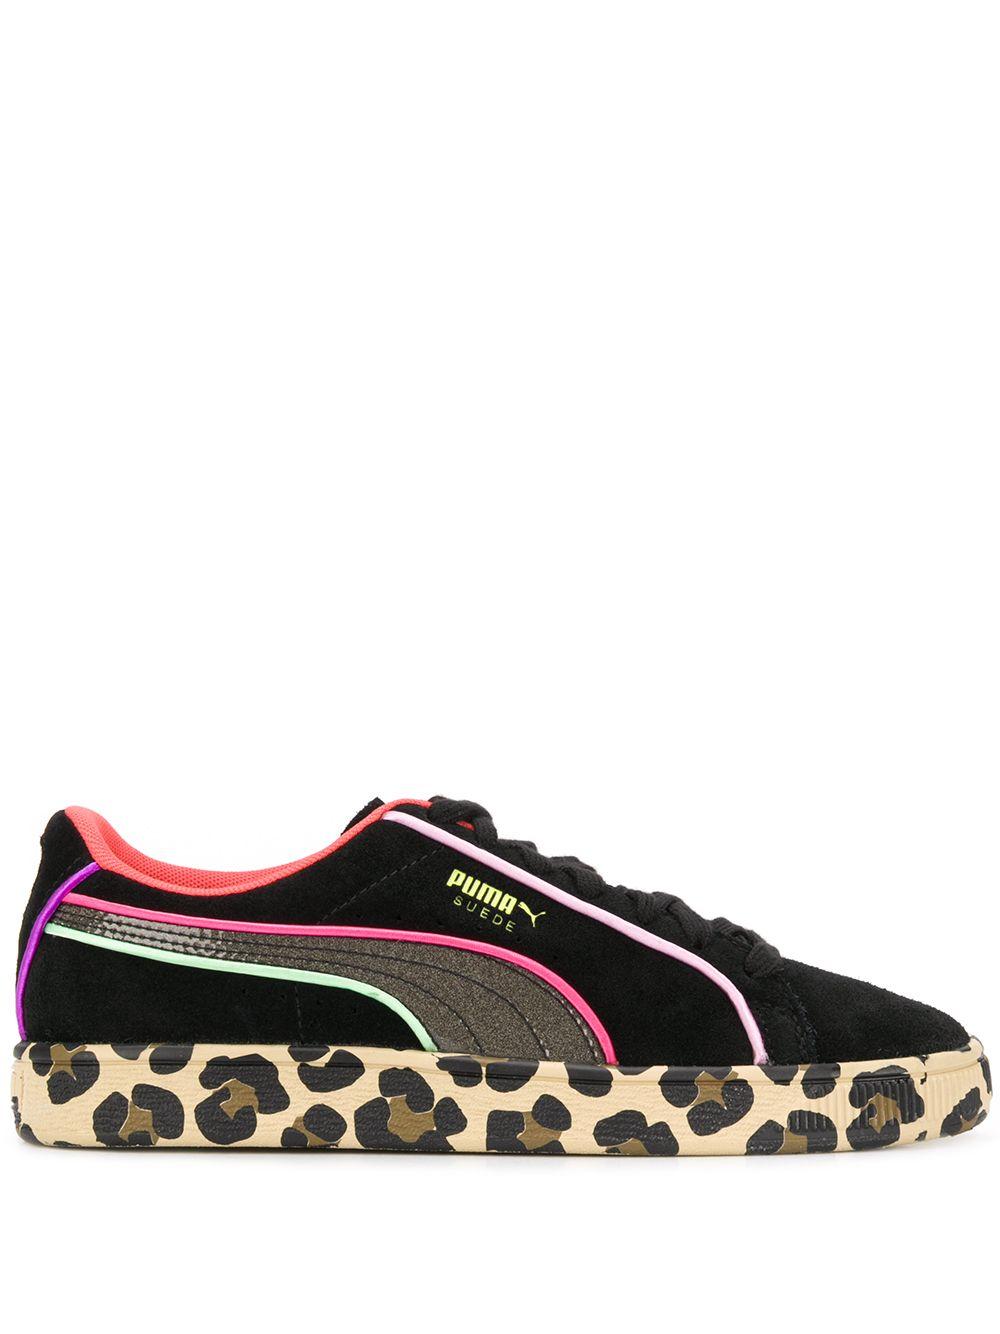 PUMA Suede Leopard Sole Sneakers in Black | Lyst UK